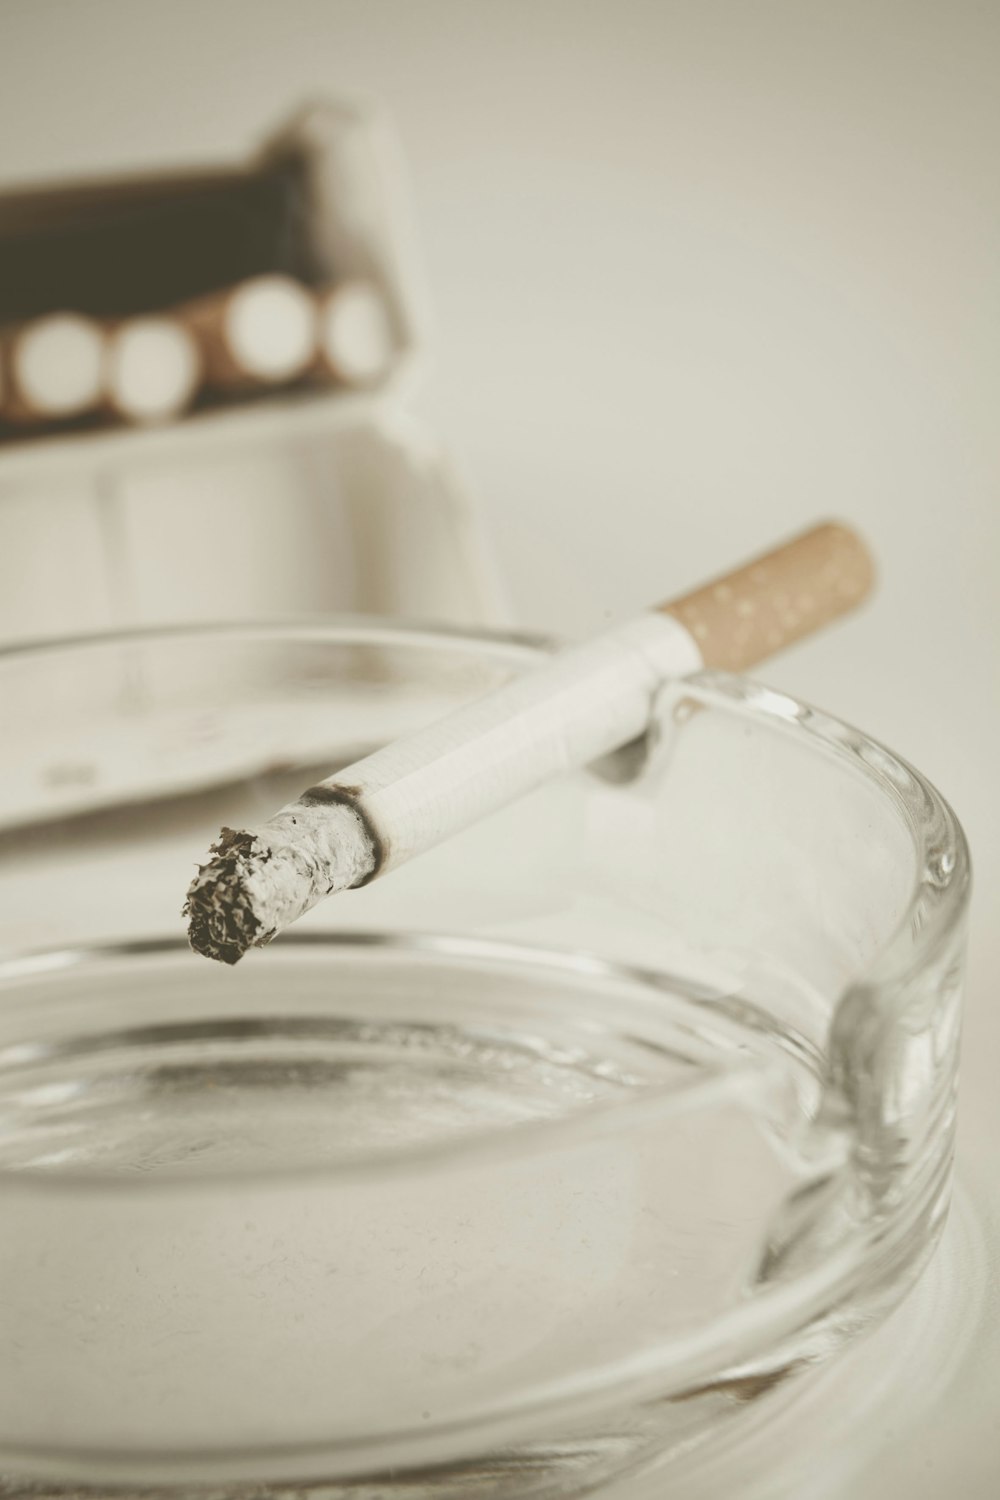 lighted cigarette stick on glass ashtray